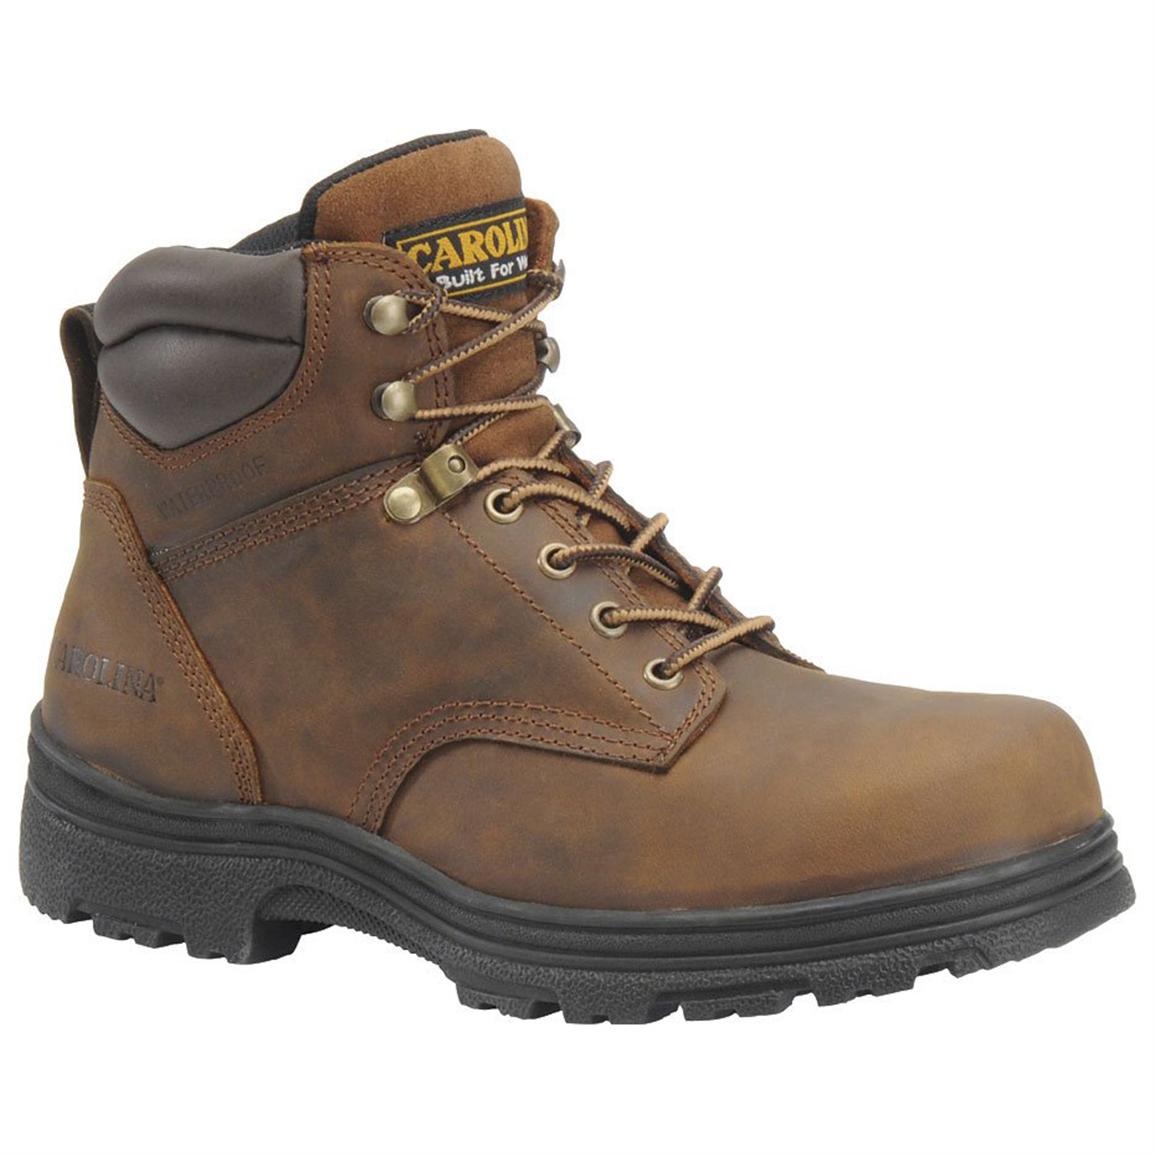 Men's Carolina® SVB 6 inch Steel Toe Waterproof Work Boots, Brown